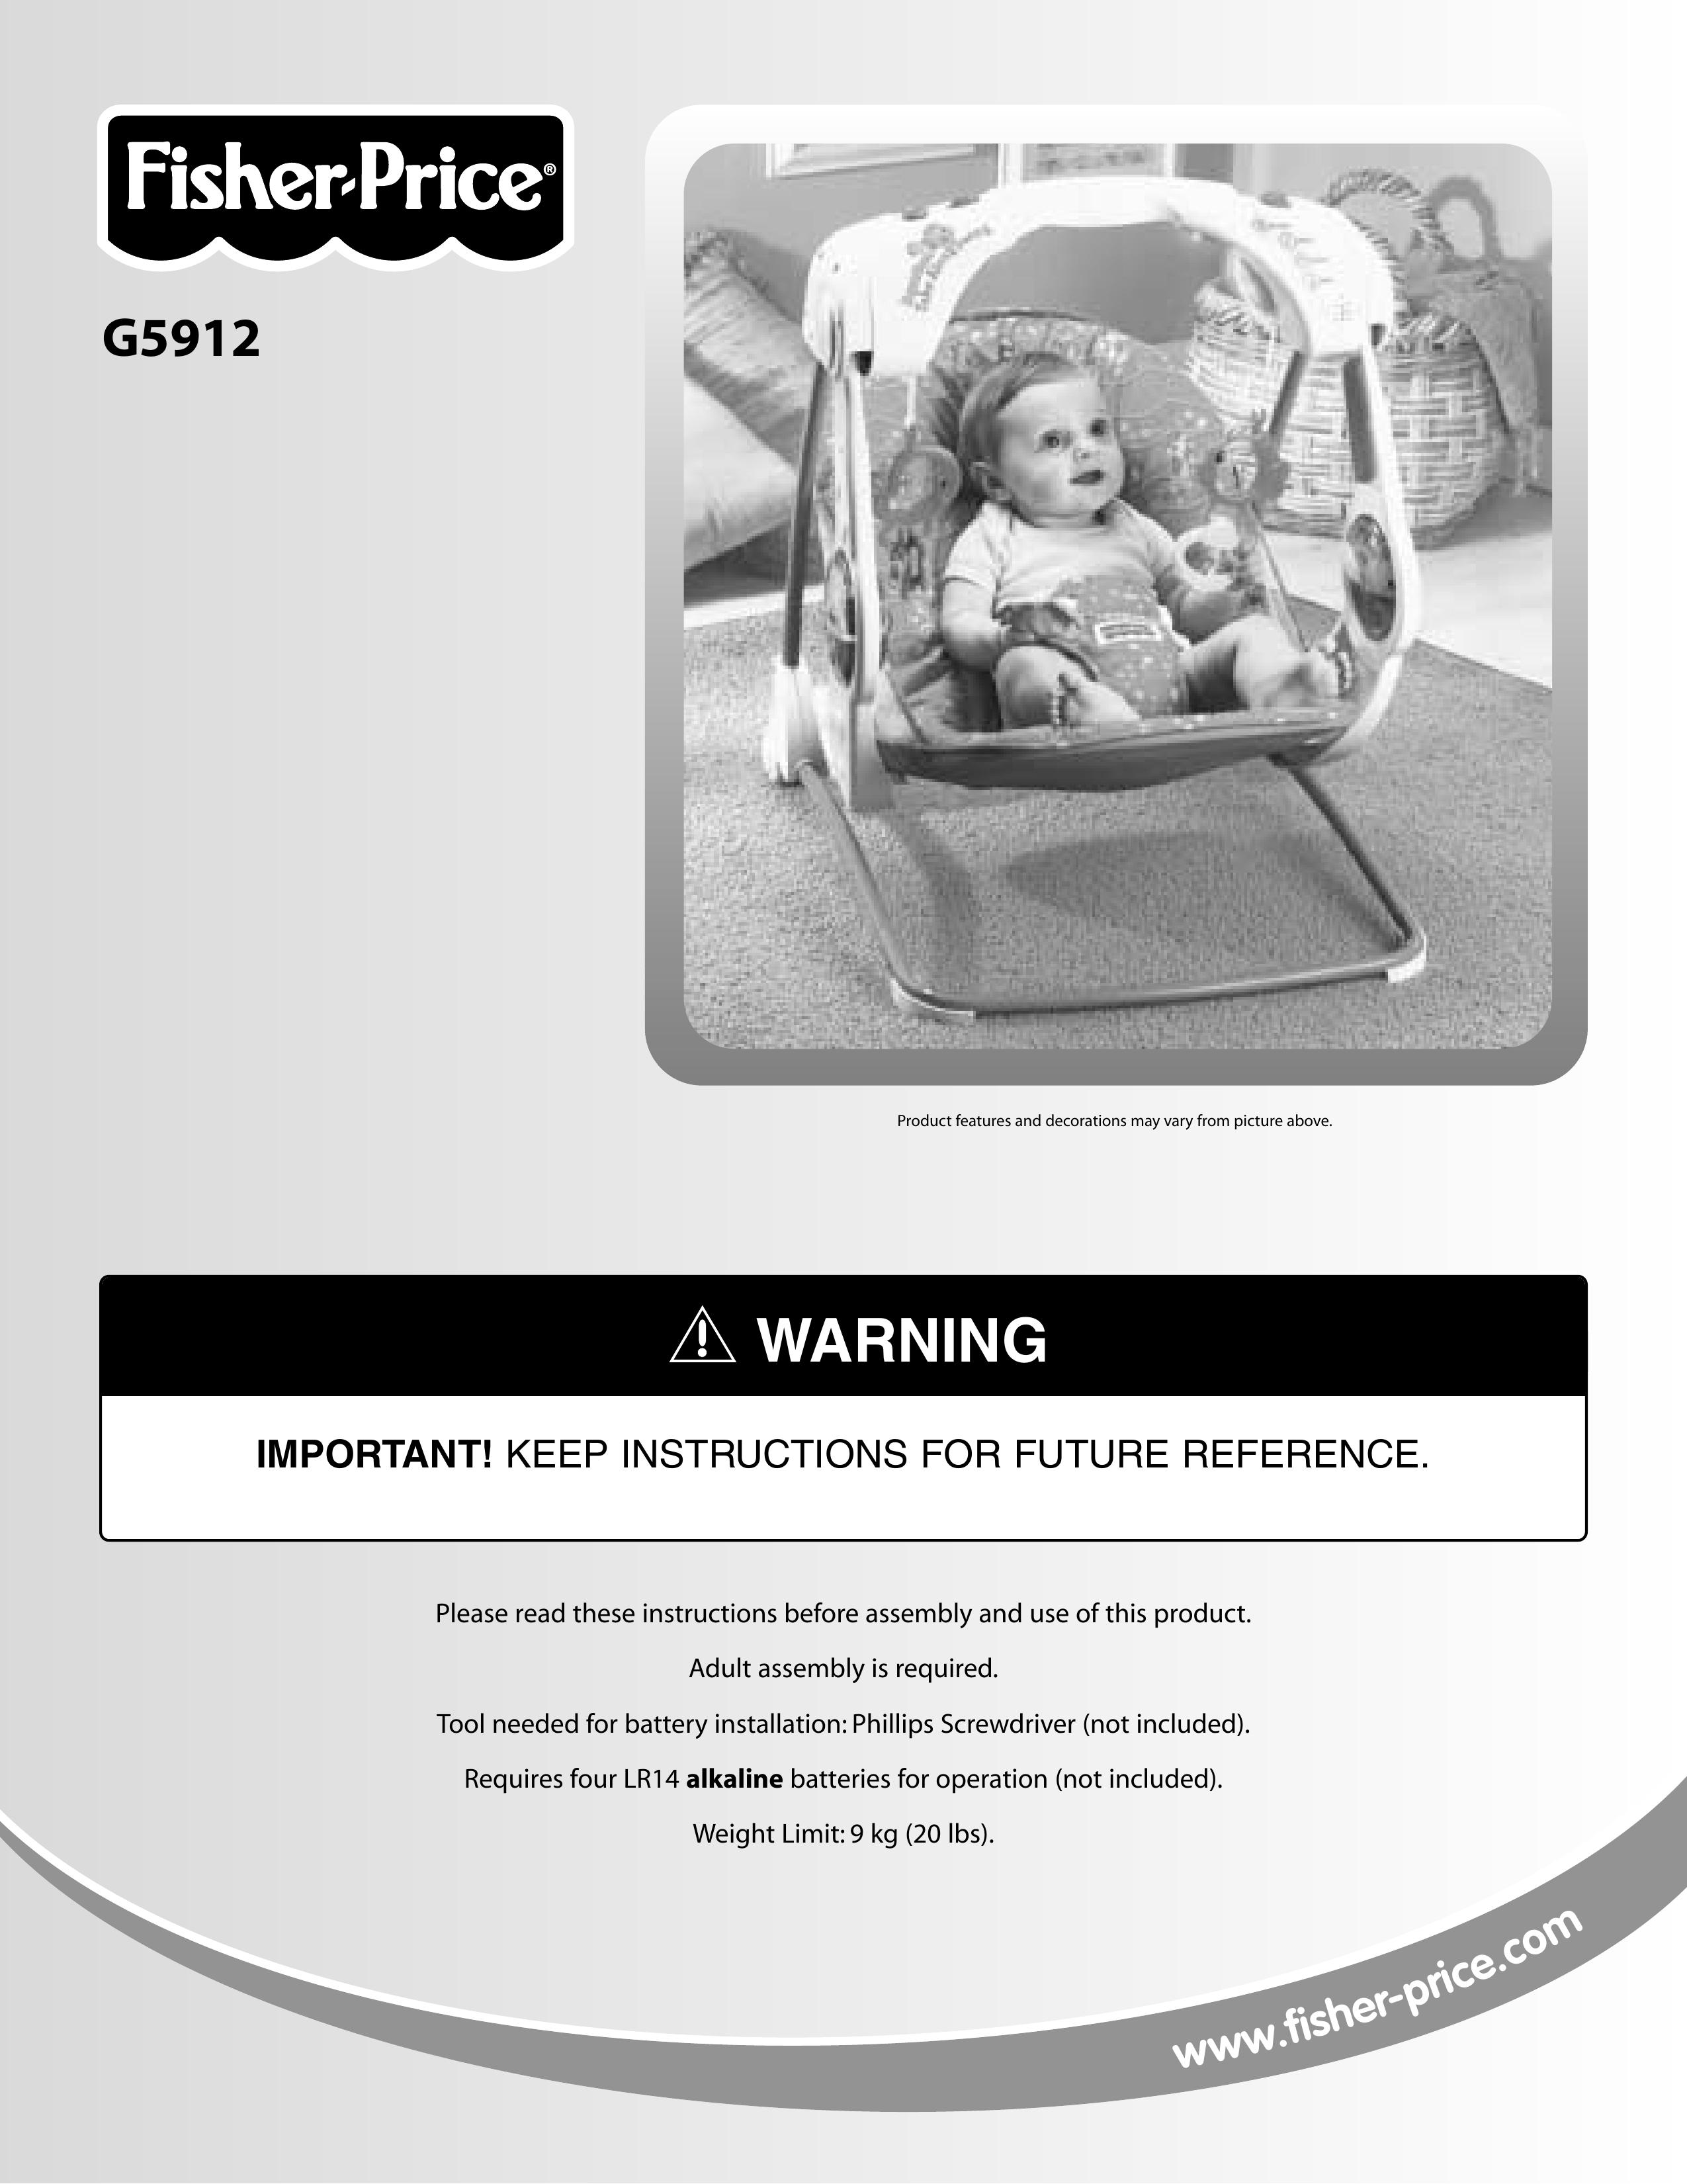 Fisher-Price G5912 Swing Sets User Manual